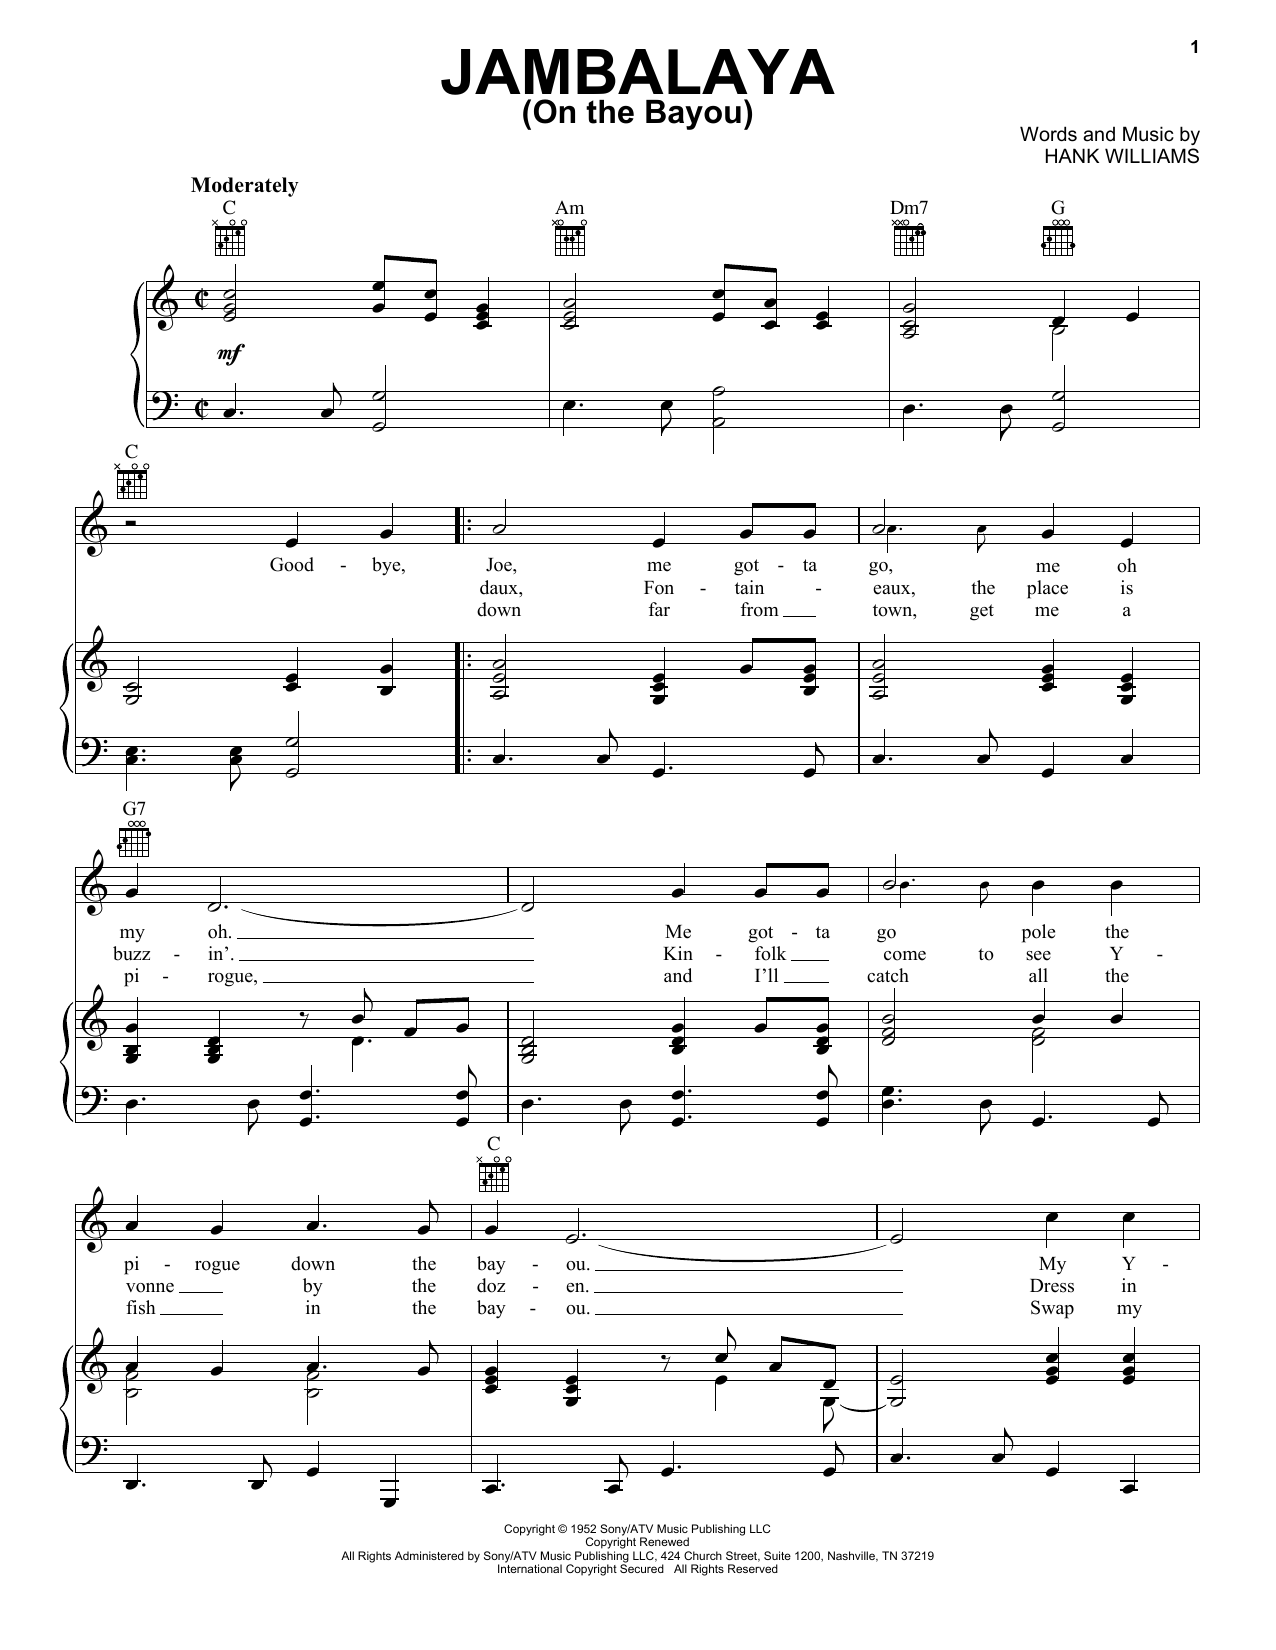 Hank Williams Jambalaya (On The Bayou) Sheet Music Notes & Chords for Banjo Tab - Download or Print PDF